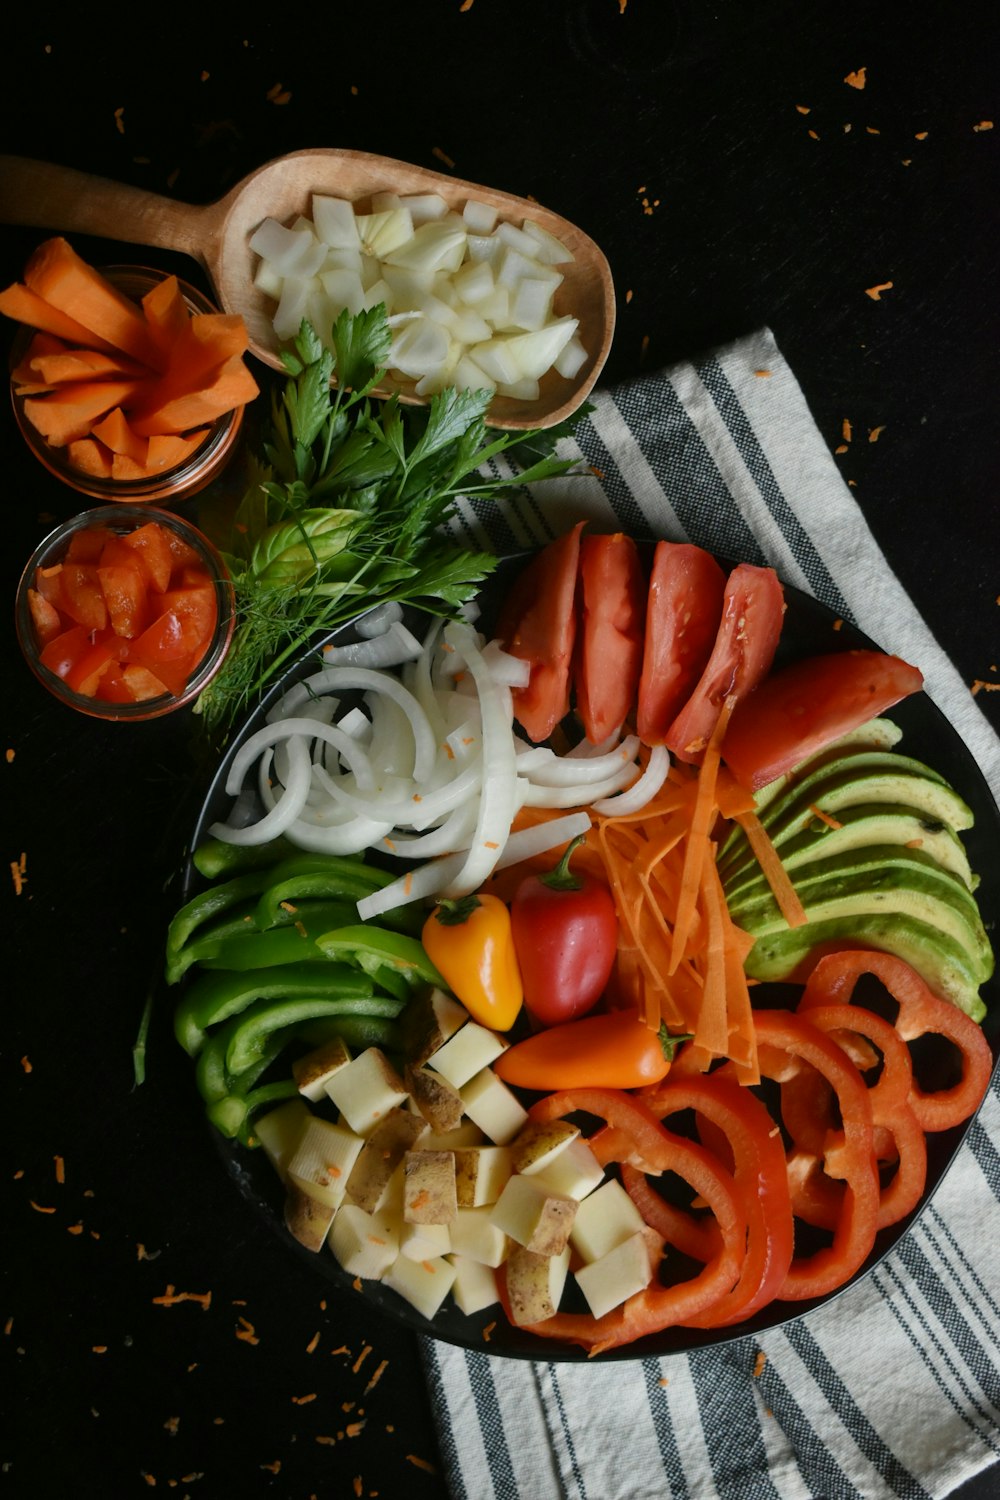 sliced tomato and green vegetable salad